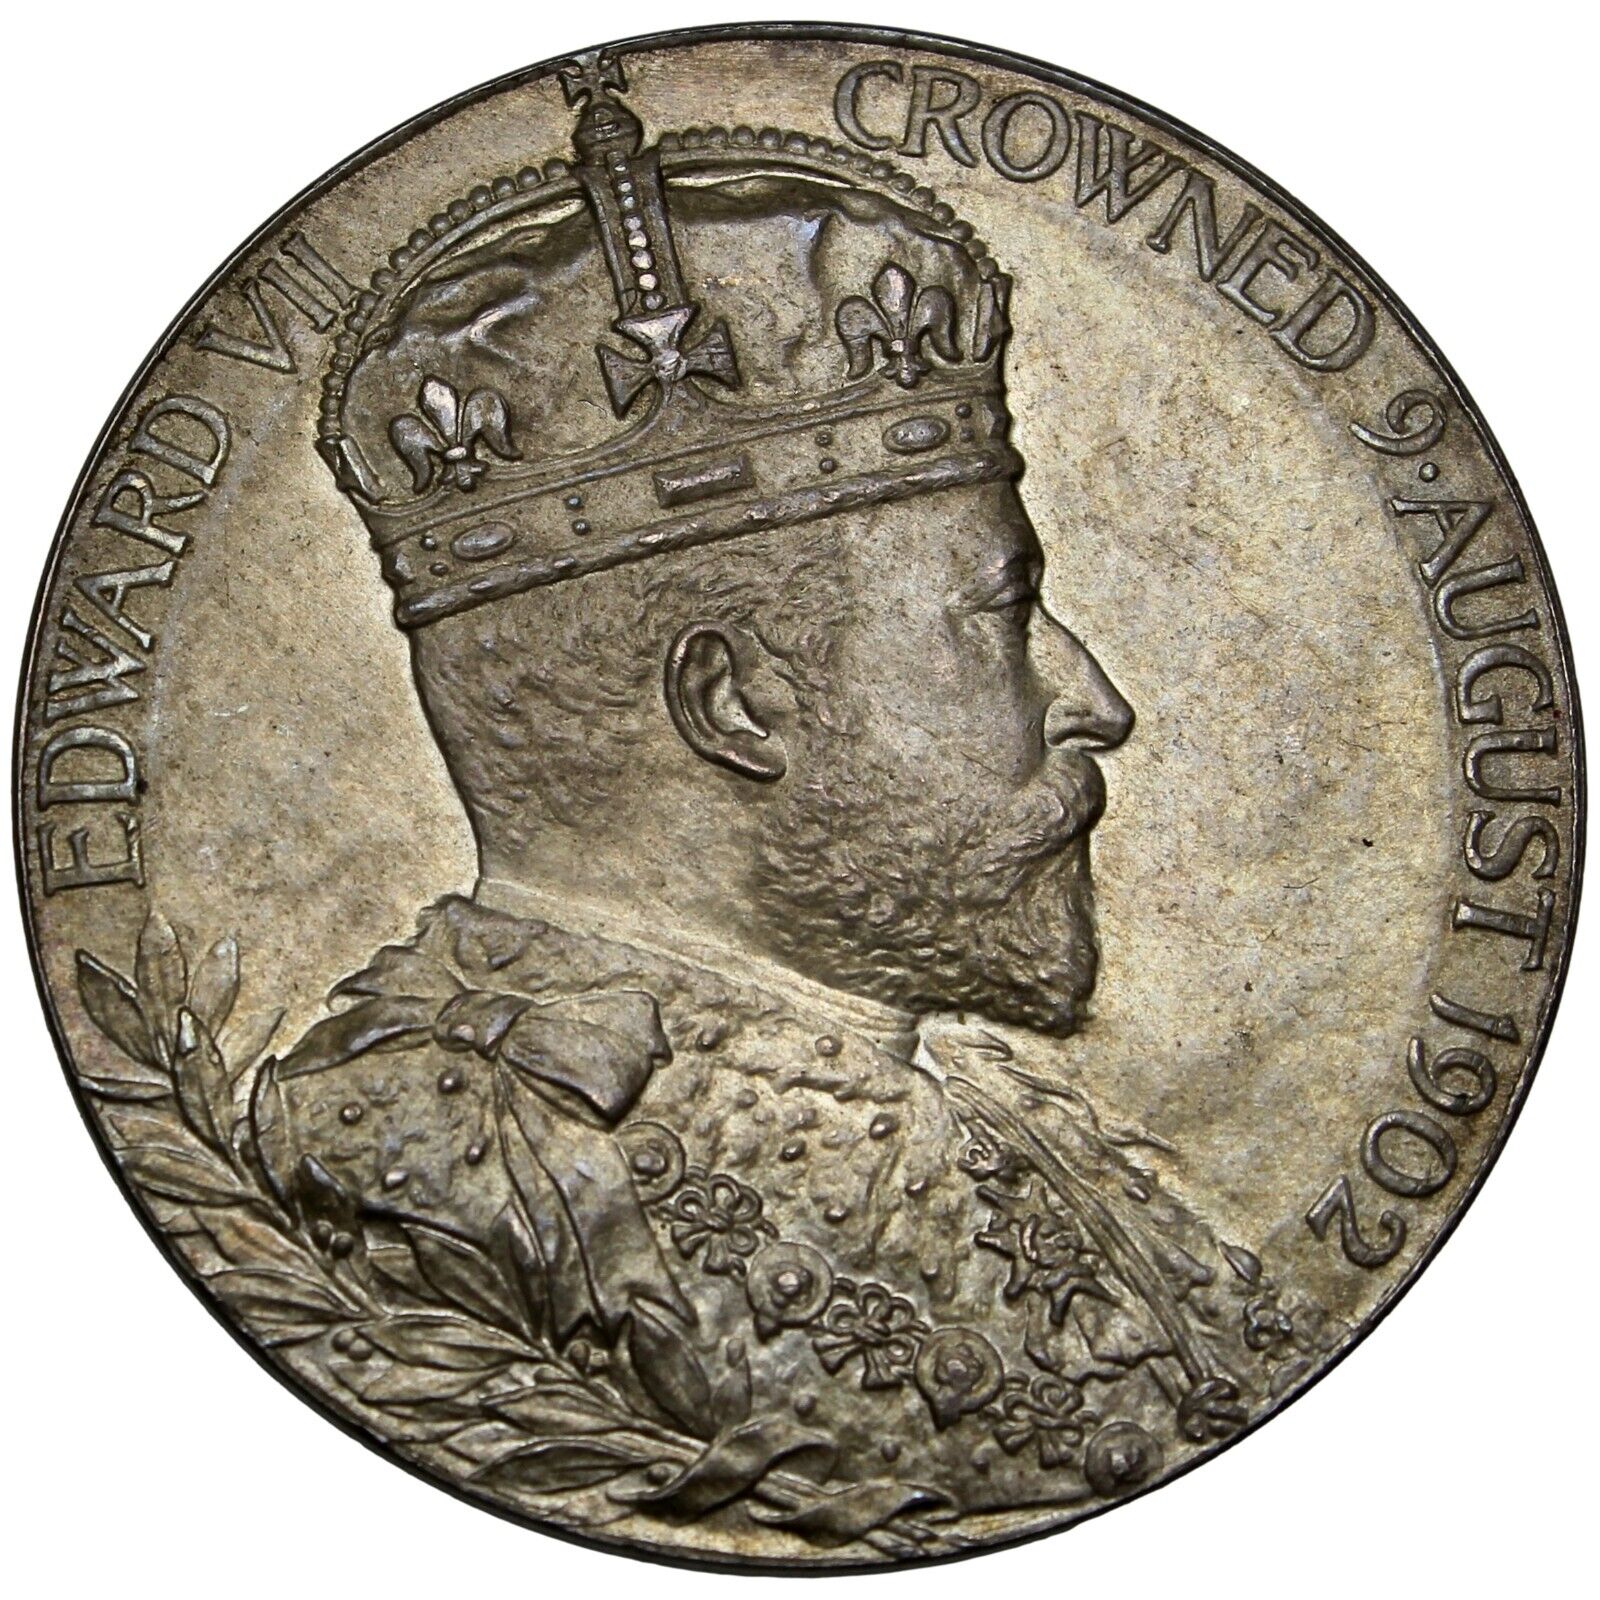 CORONATION of Edward VII & Alexandra 1902 silver Medal / Eimer-1871b